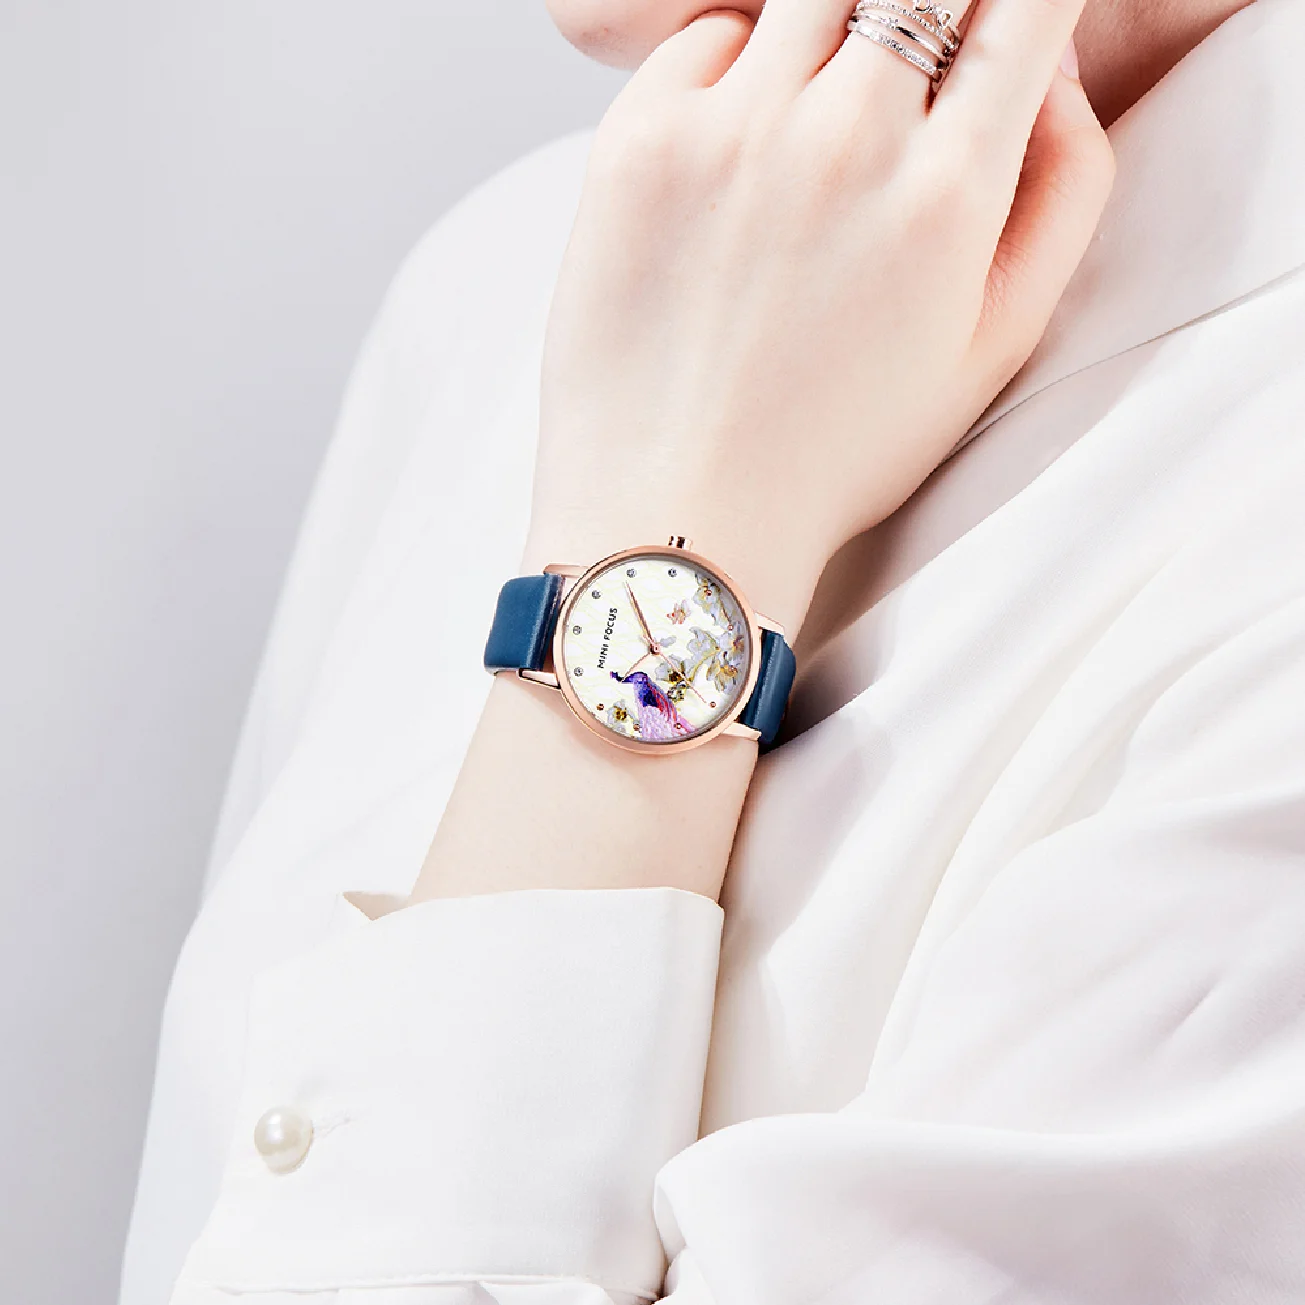 MINI FOCUS Fashion Women Blue Quartz Watch Top Brand Luxury Lady Leather Watchband Casual Waterproof Wristwatch Gift for Girl enlarge